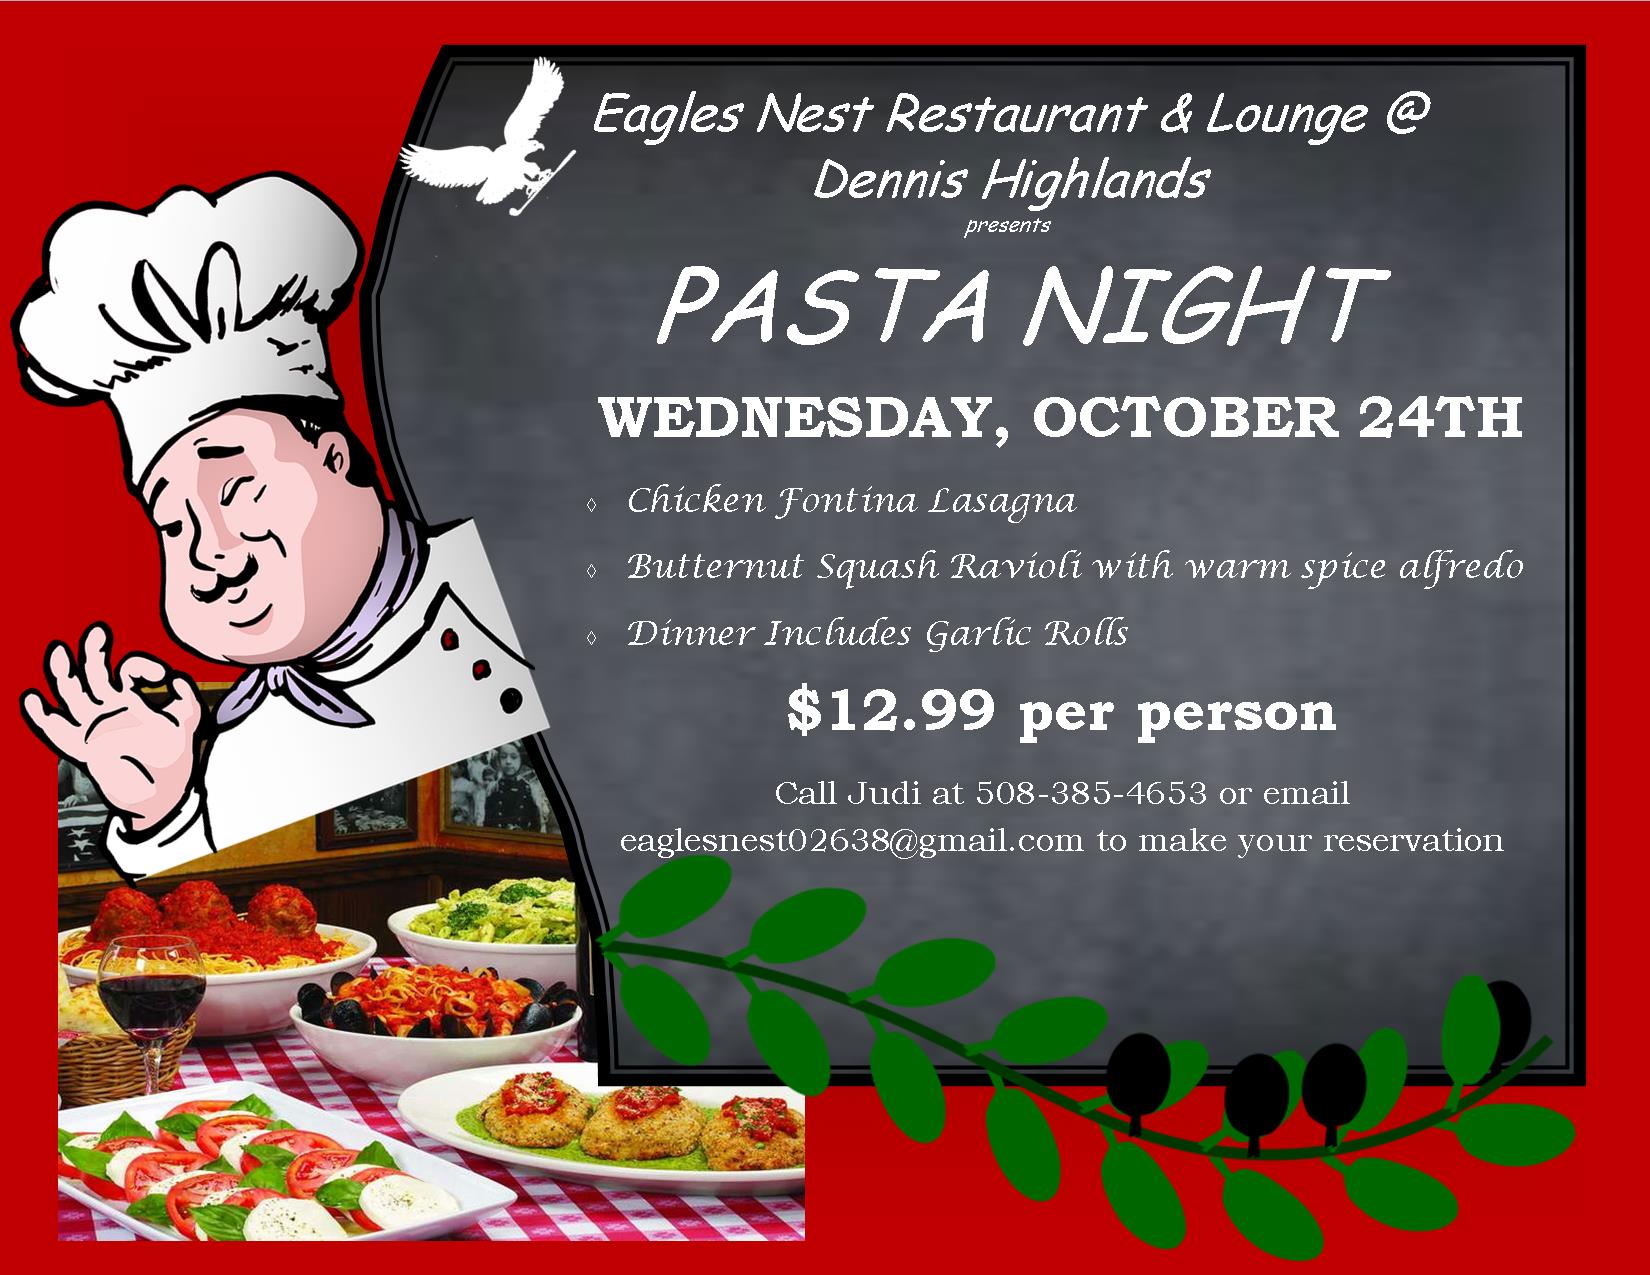 download free pasta night fnf